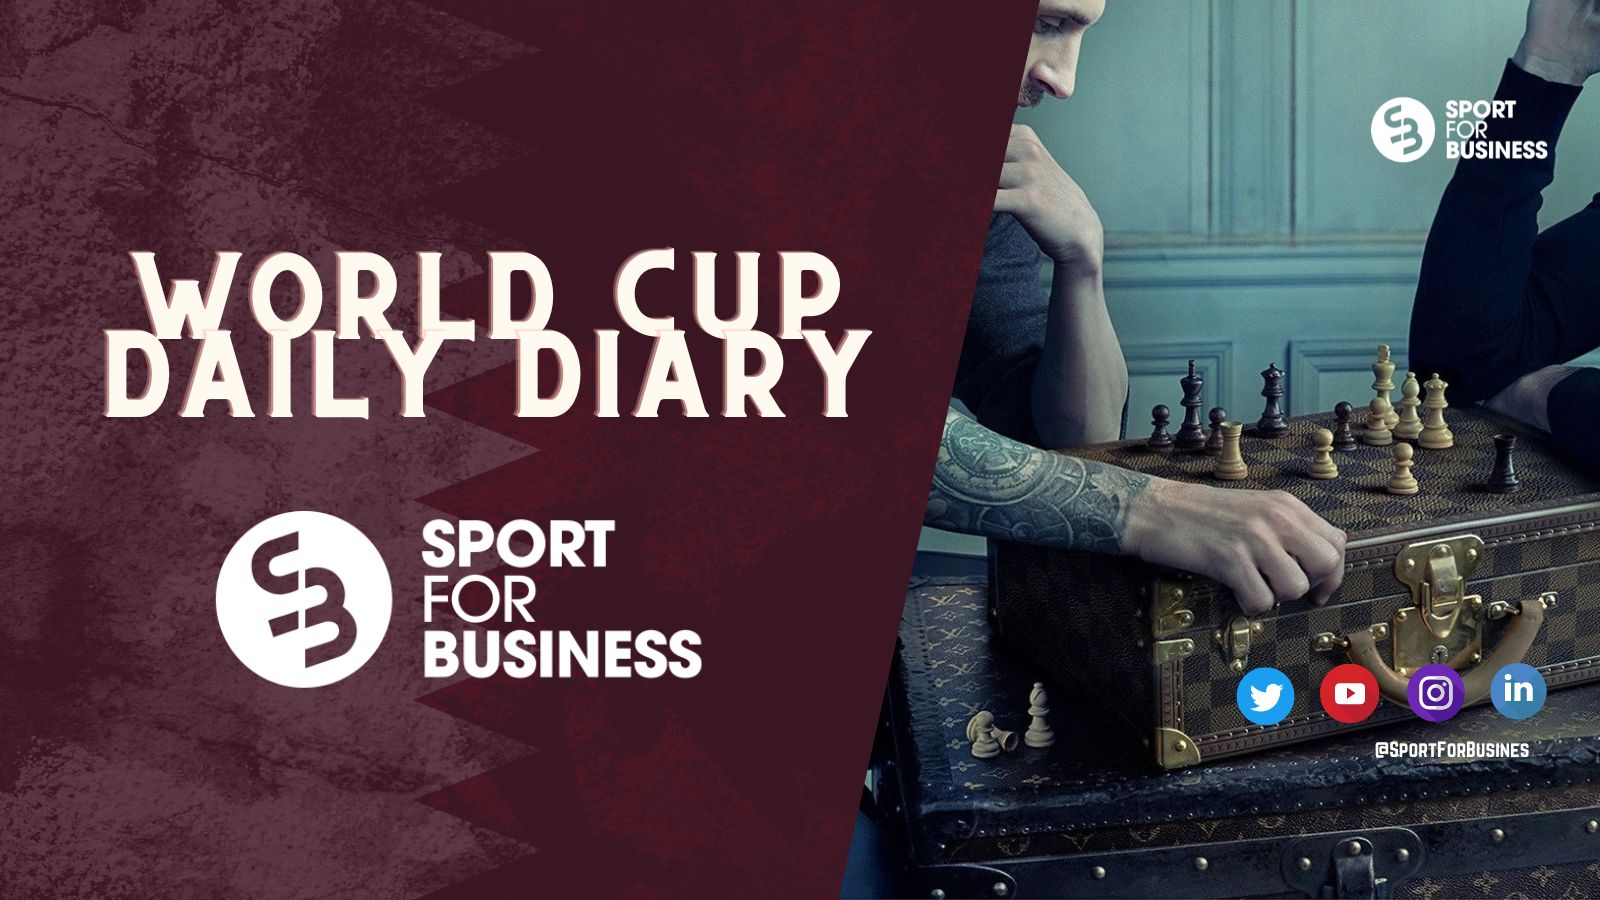 FIFA World Cup Daily Diary - Fan Numbers, Wanda, One Love, Noel